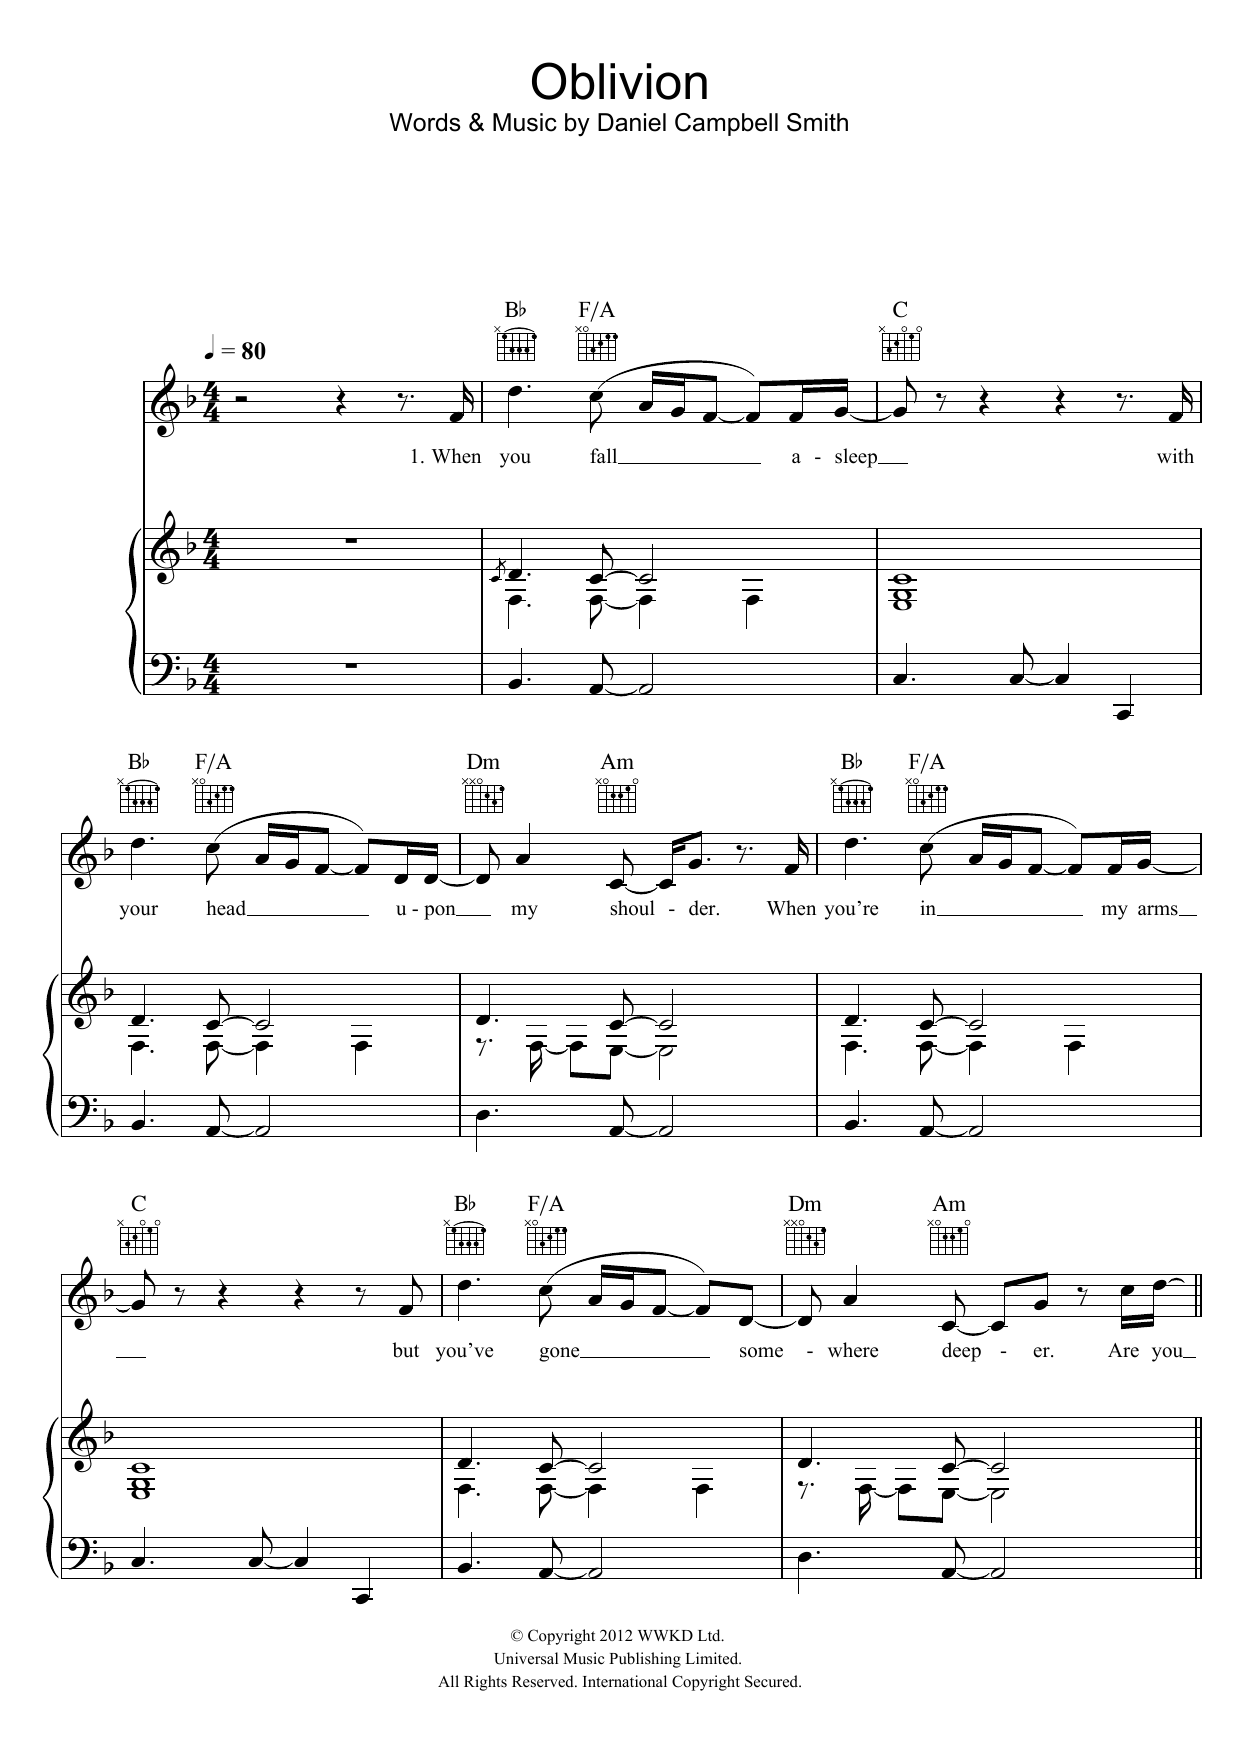 Bastille Oblivion Sheet Music Notes & Chords for Piano, Vocal & Guitar - Download or Print PDF